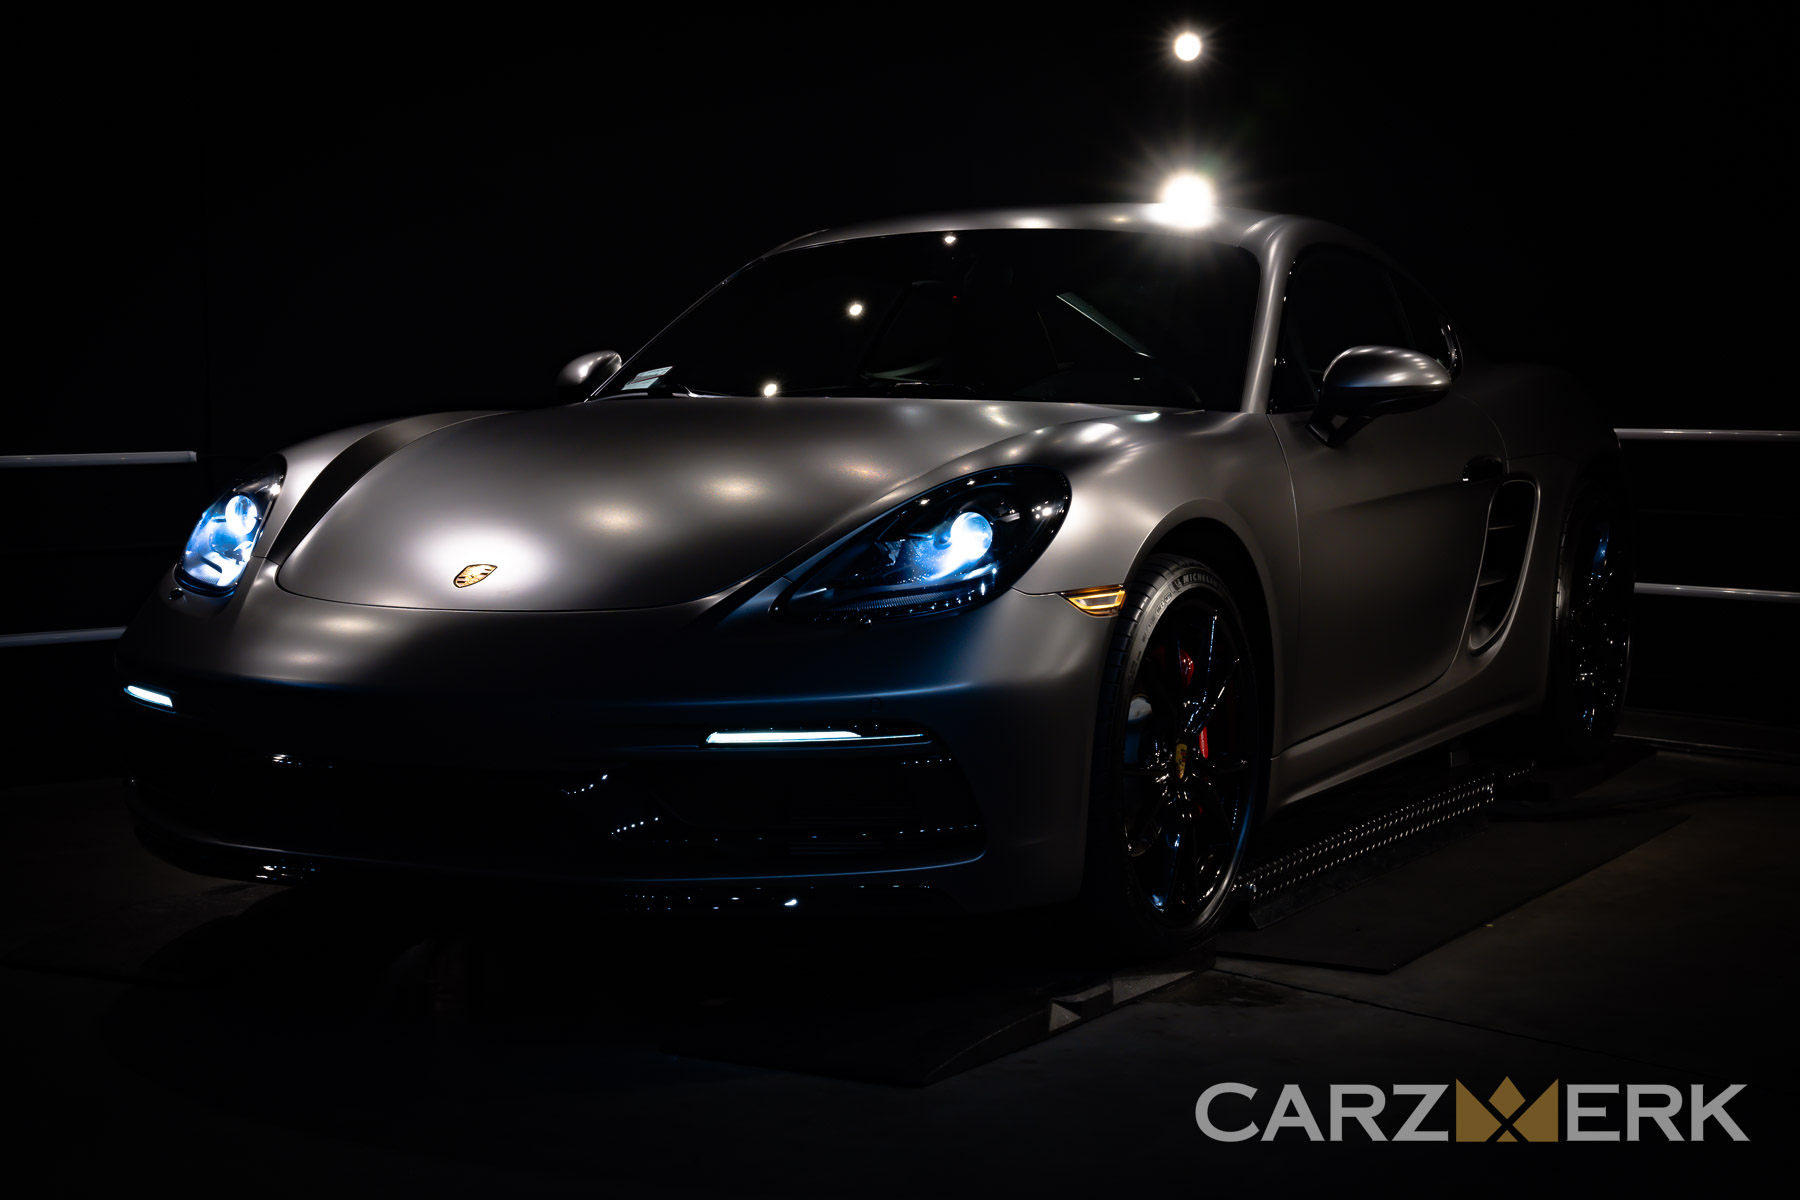 2020 Porsche Cayman S - Agate Grey Metallic wrapped in Suntek Matte PPF Paint Protection Film - Night Mode - Lights on